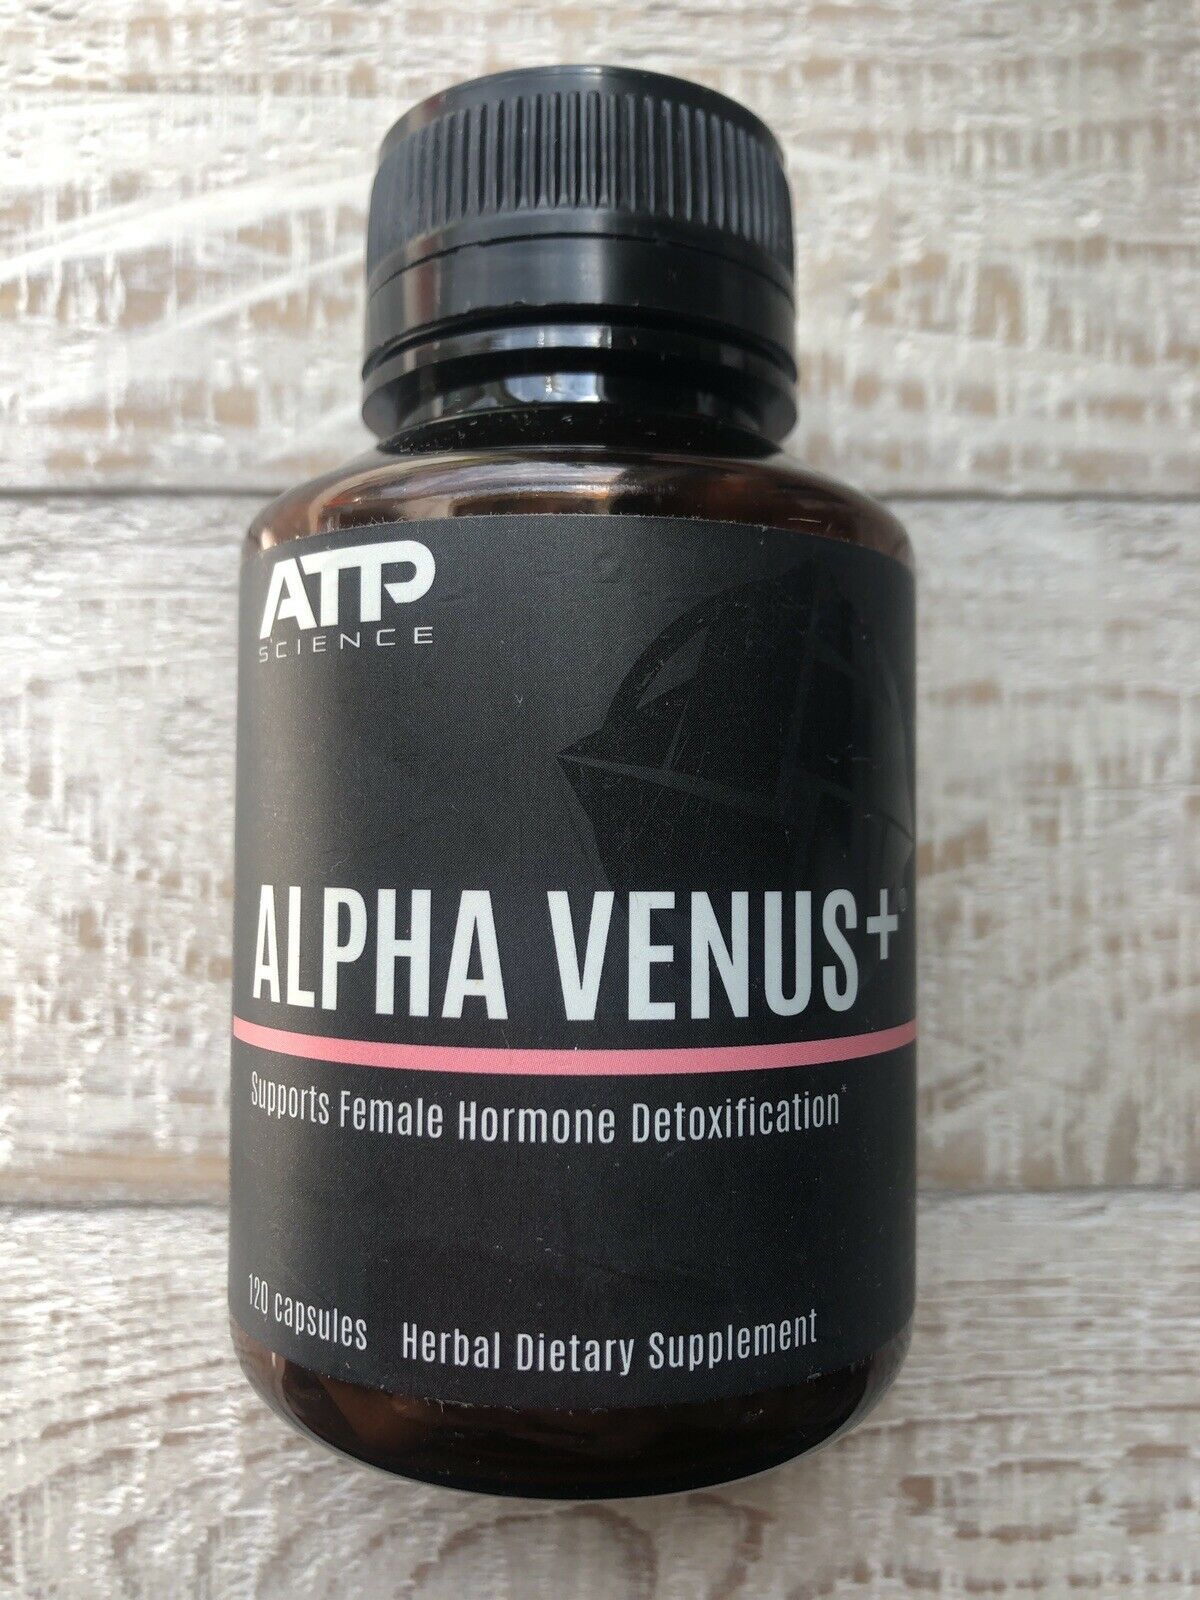 ATP Science ALPHA VENUS+ • Supports Female Hormone Detoxification • 120 Capsules